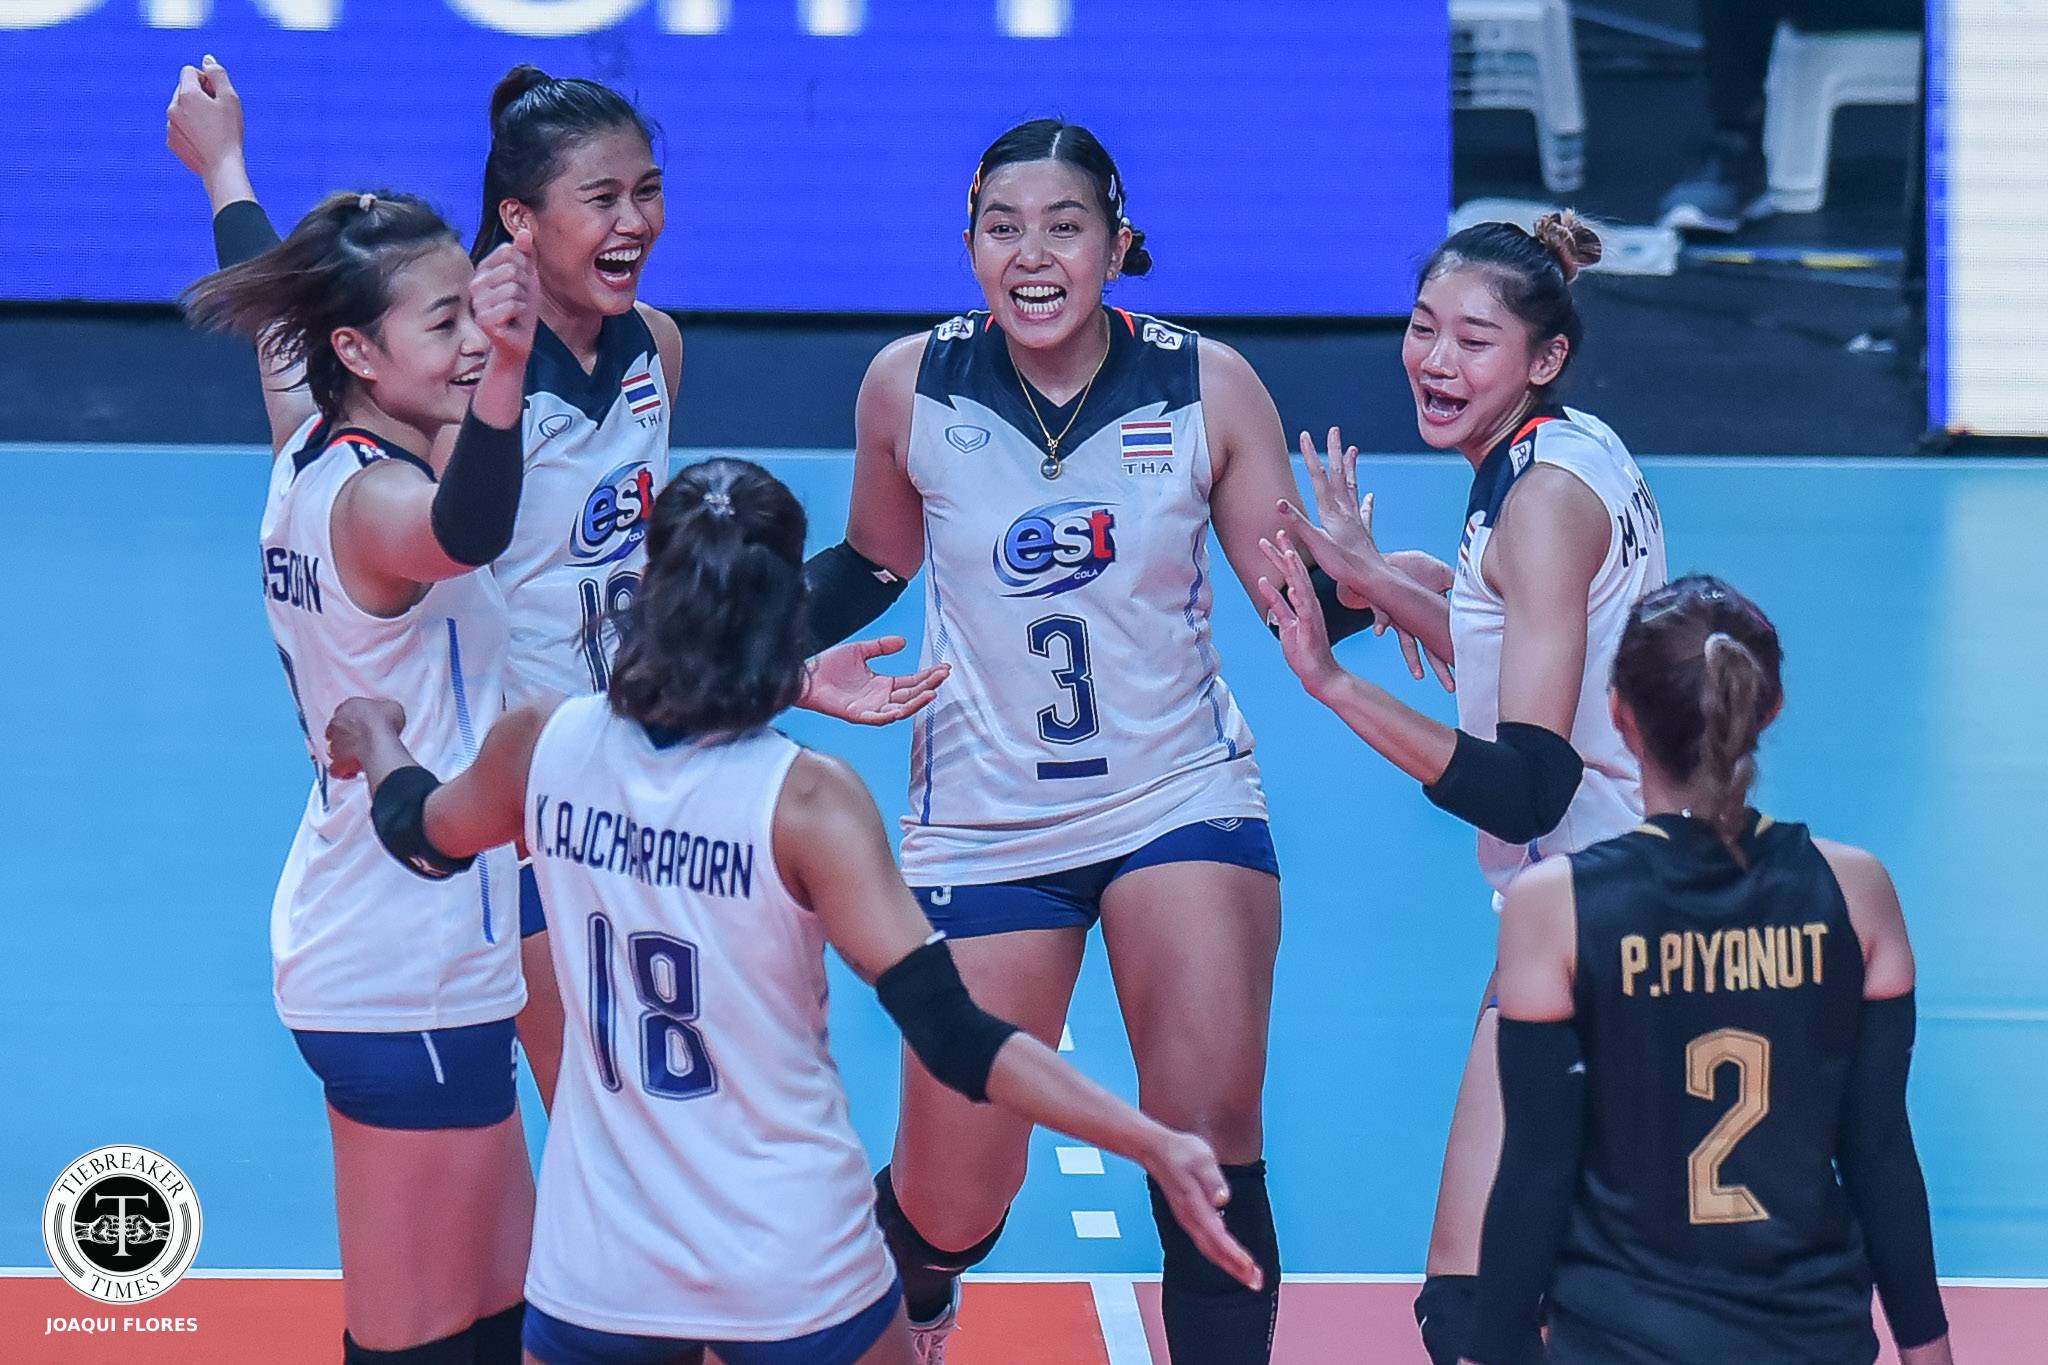 VNL-2022-USA-vs.-Thailand-Pornpun-Guedpard-8243 Pornpun urges Thailand to keep fighting despite what happened in VNL Manila 2022 VNL Season News Volleyball  - philippine sports news